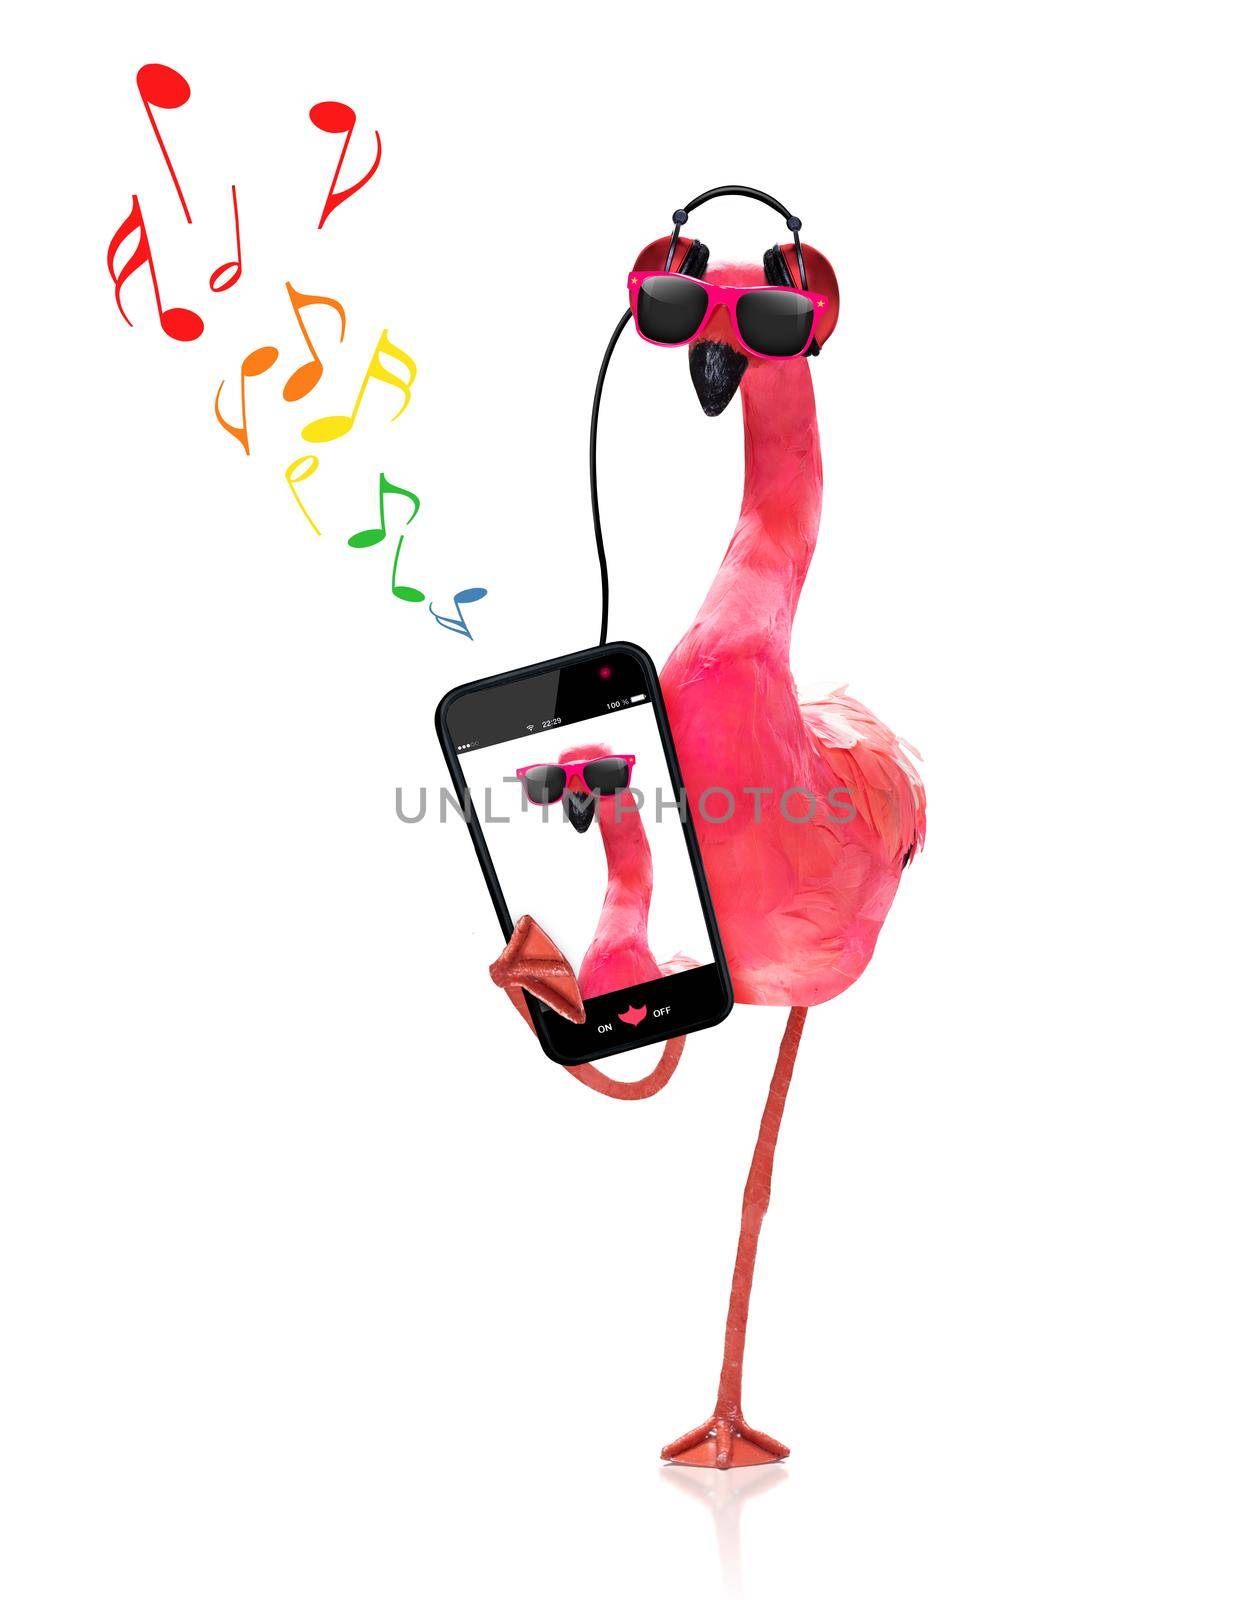 flamingo listening to music by Brosch